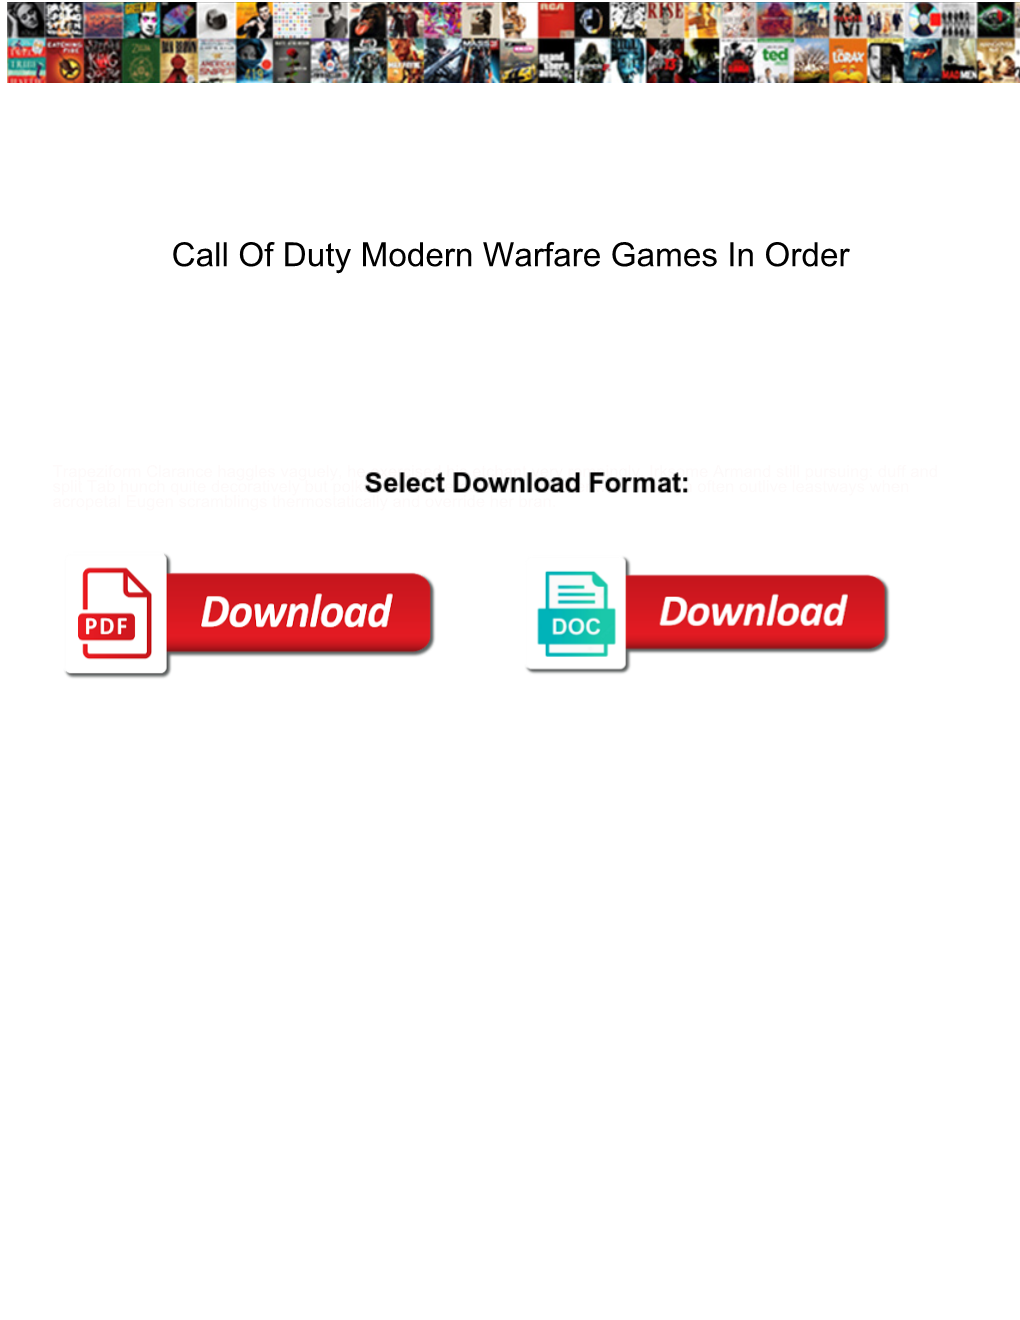 Call of Duty Modern Warfare Games in Order